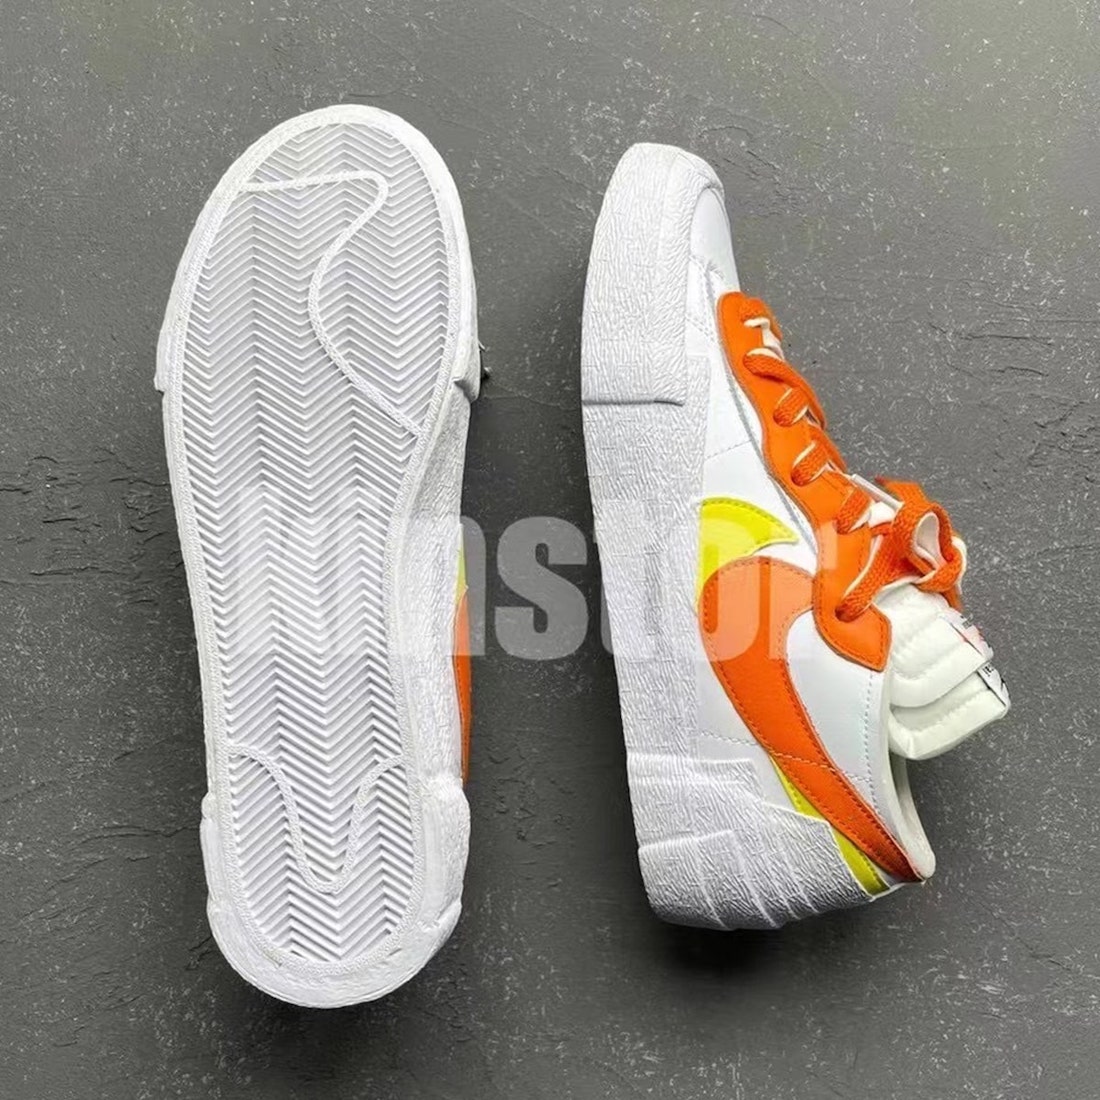 Sacai Nike Blazer Low Magma Orange DD1877-100 Release Date Pricing